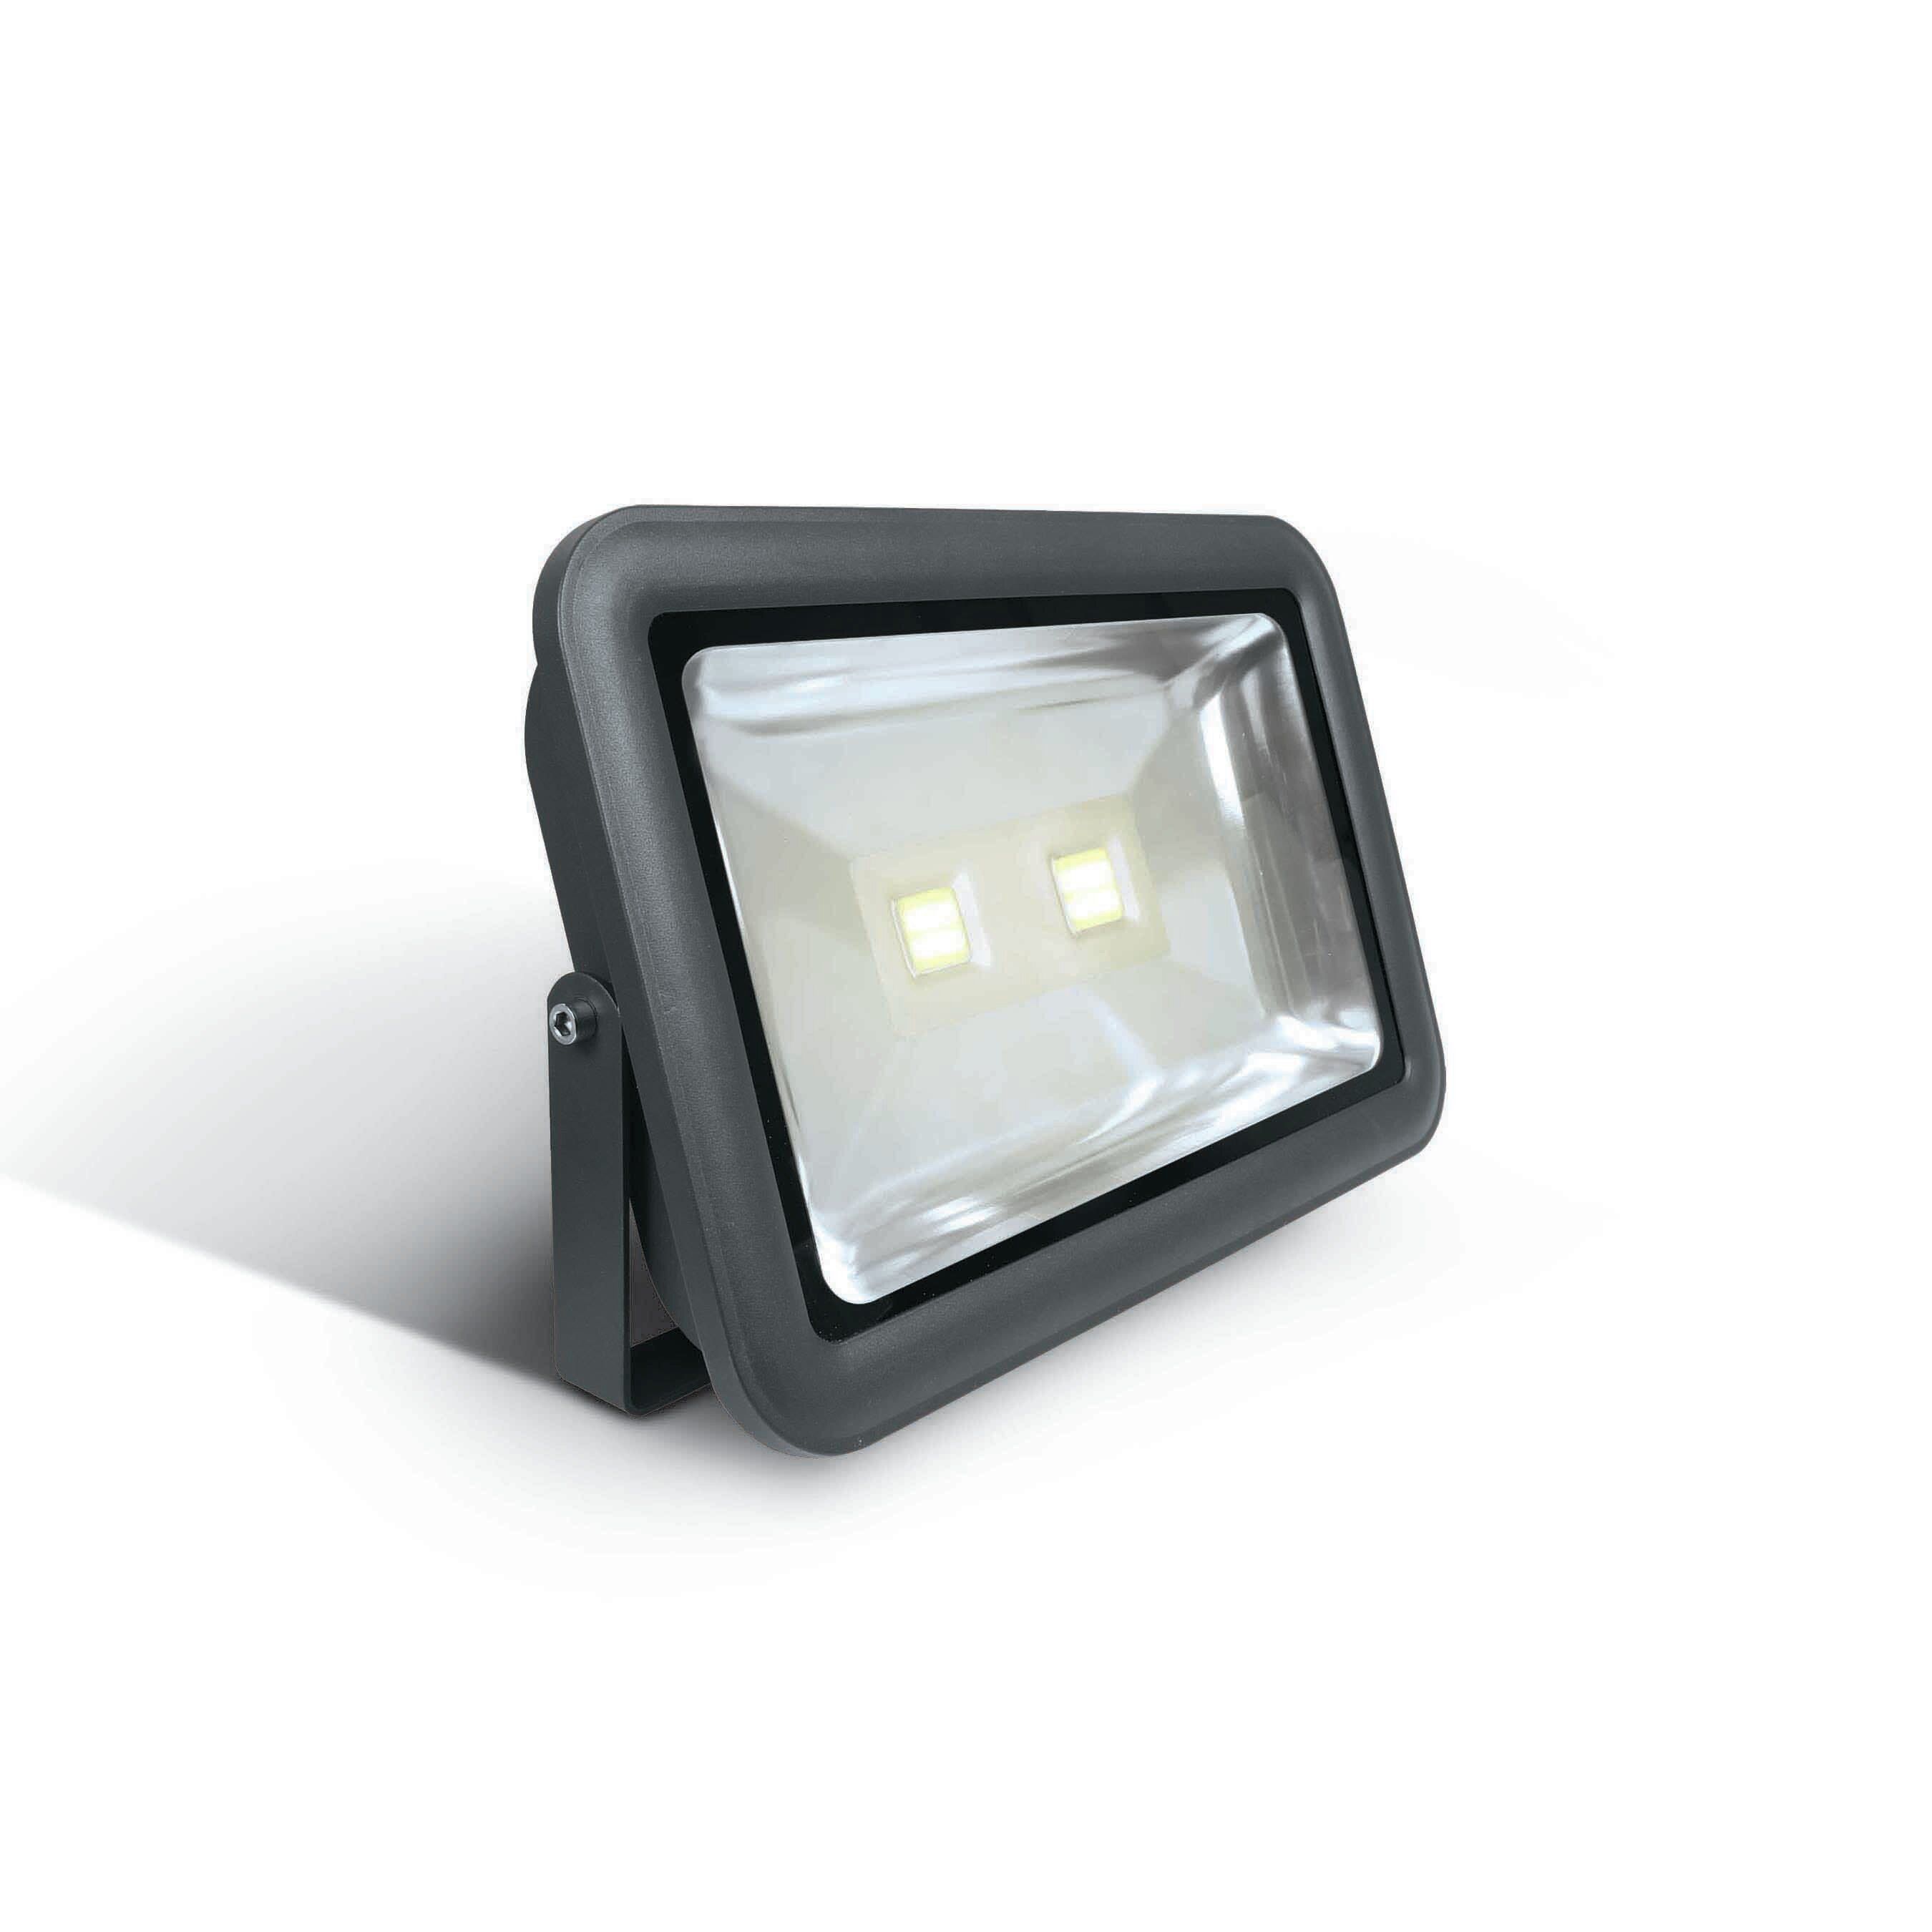 ONE Light COB LED Slim Floodlights - verstraler - 8,7 x 28,9 cm - 2 x 50W LED incl. IP65 - antraciet | Lichtkoning